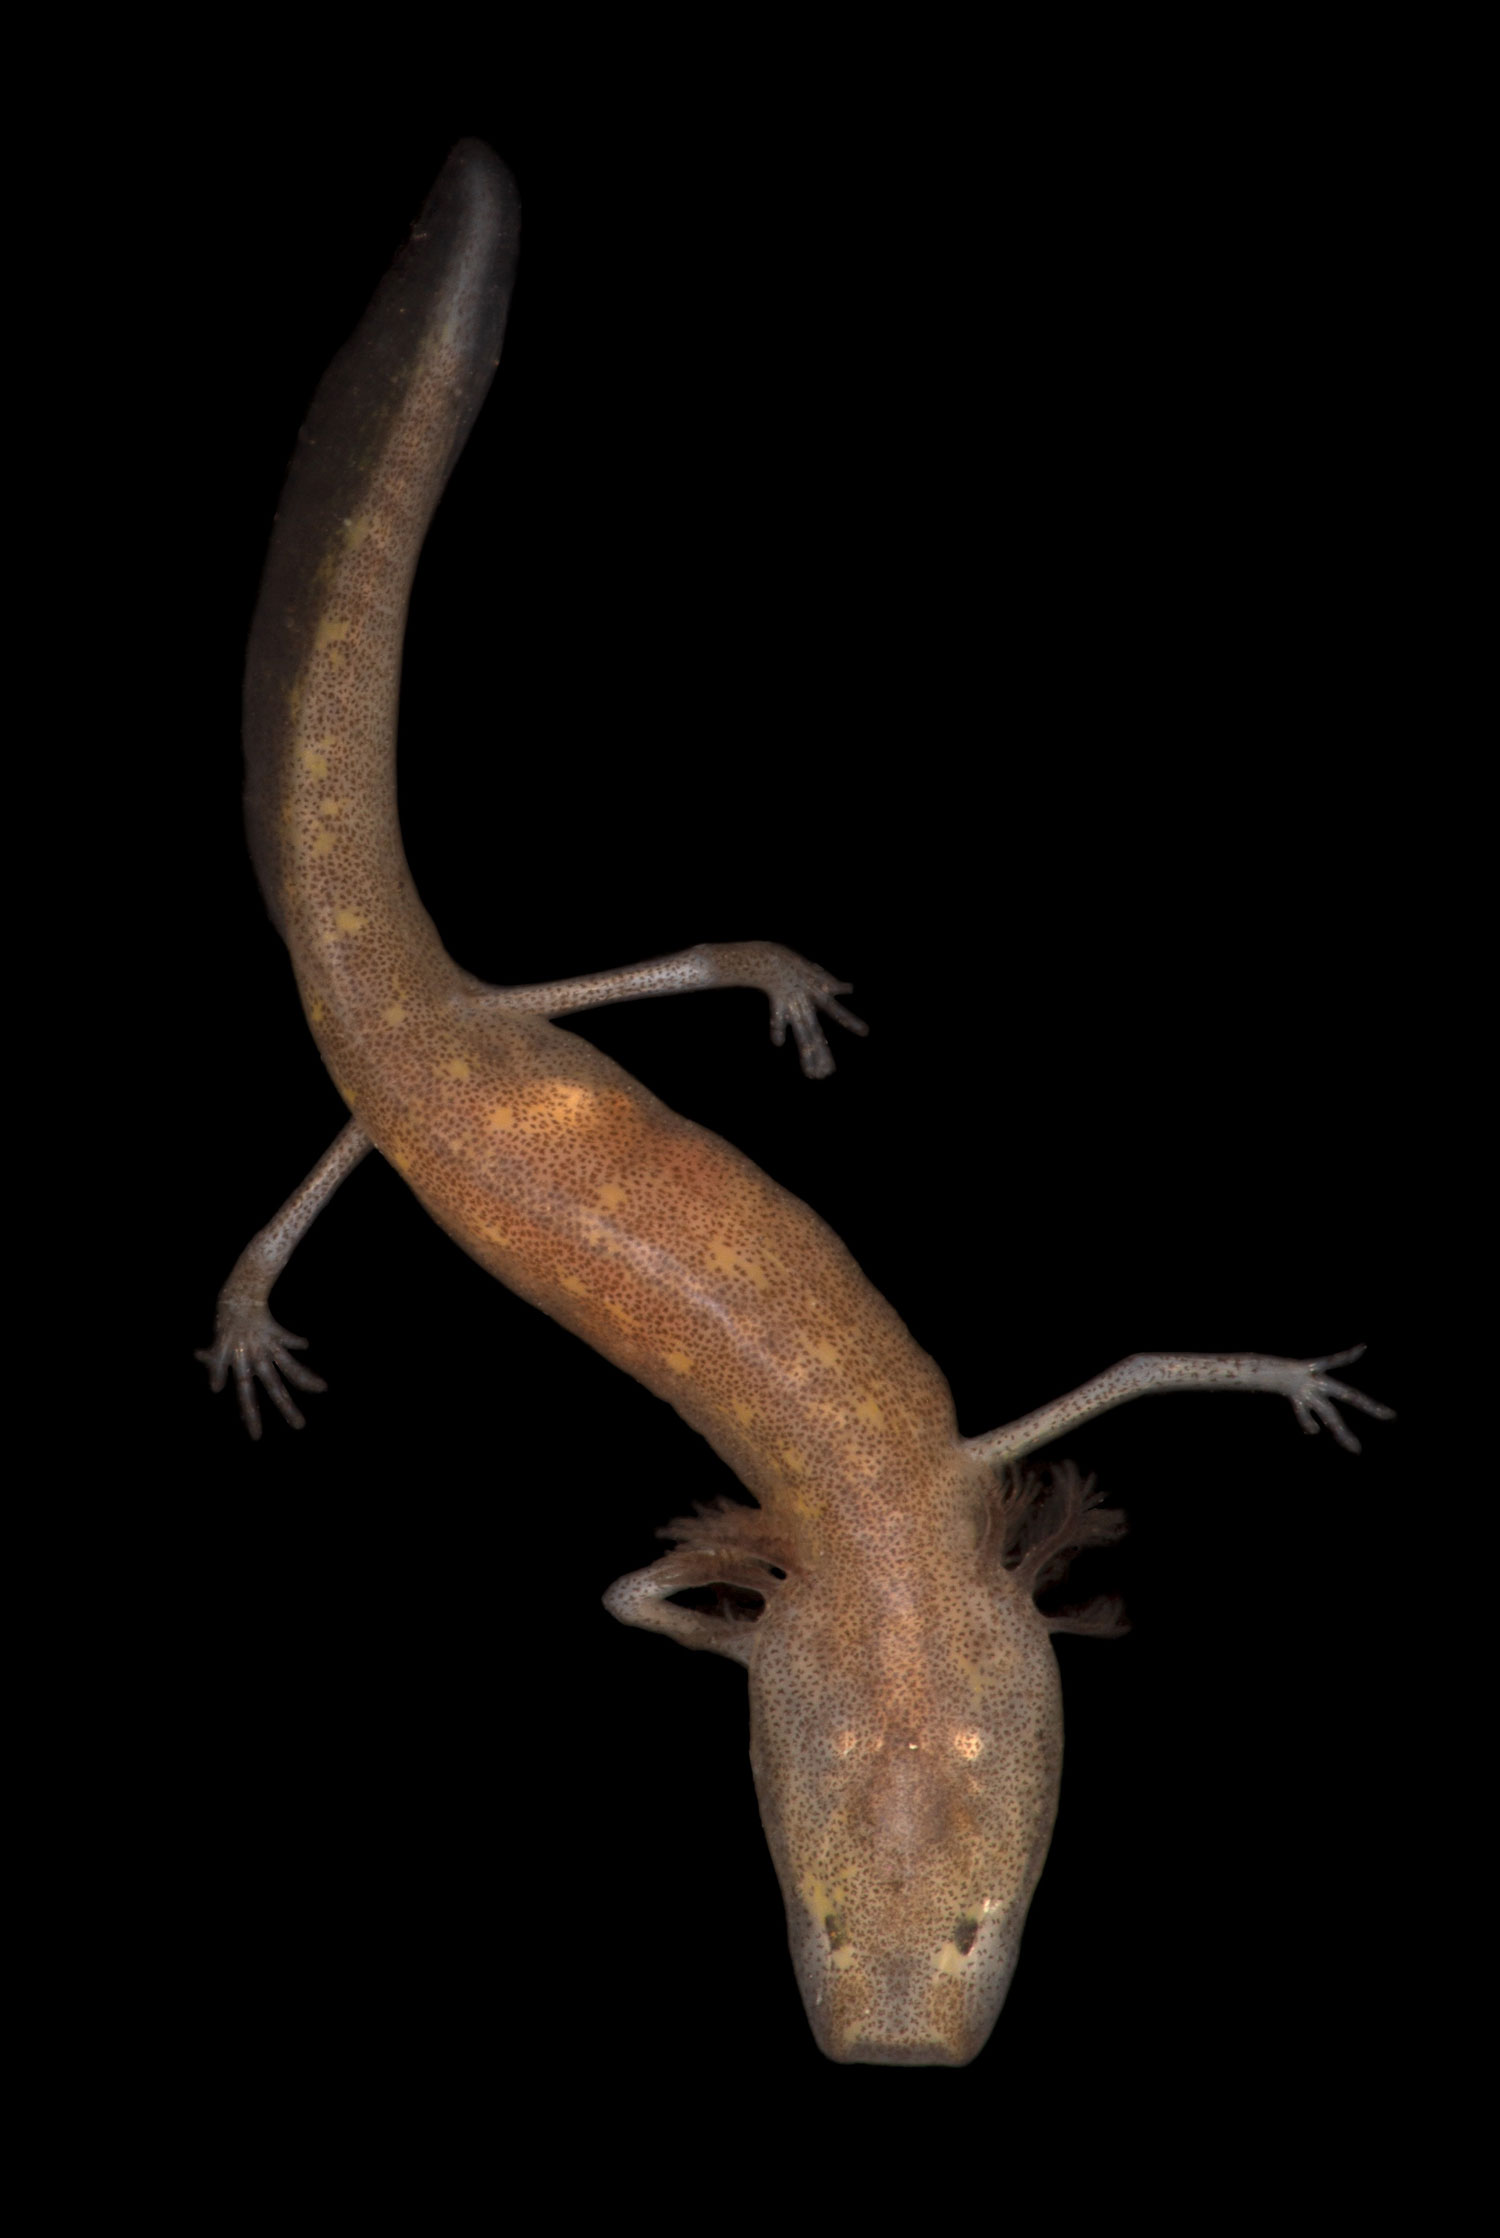 Photo of Austin Blind Salamander